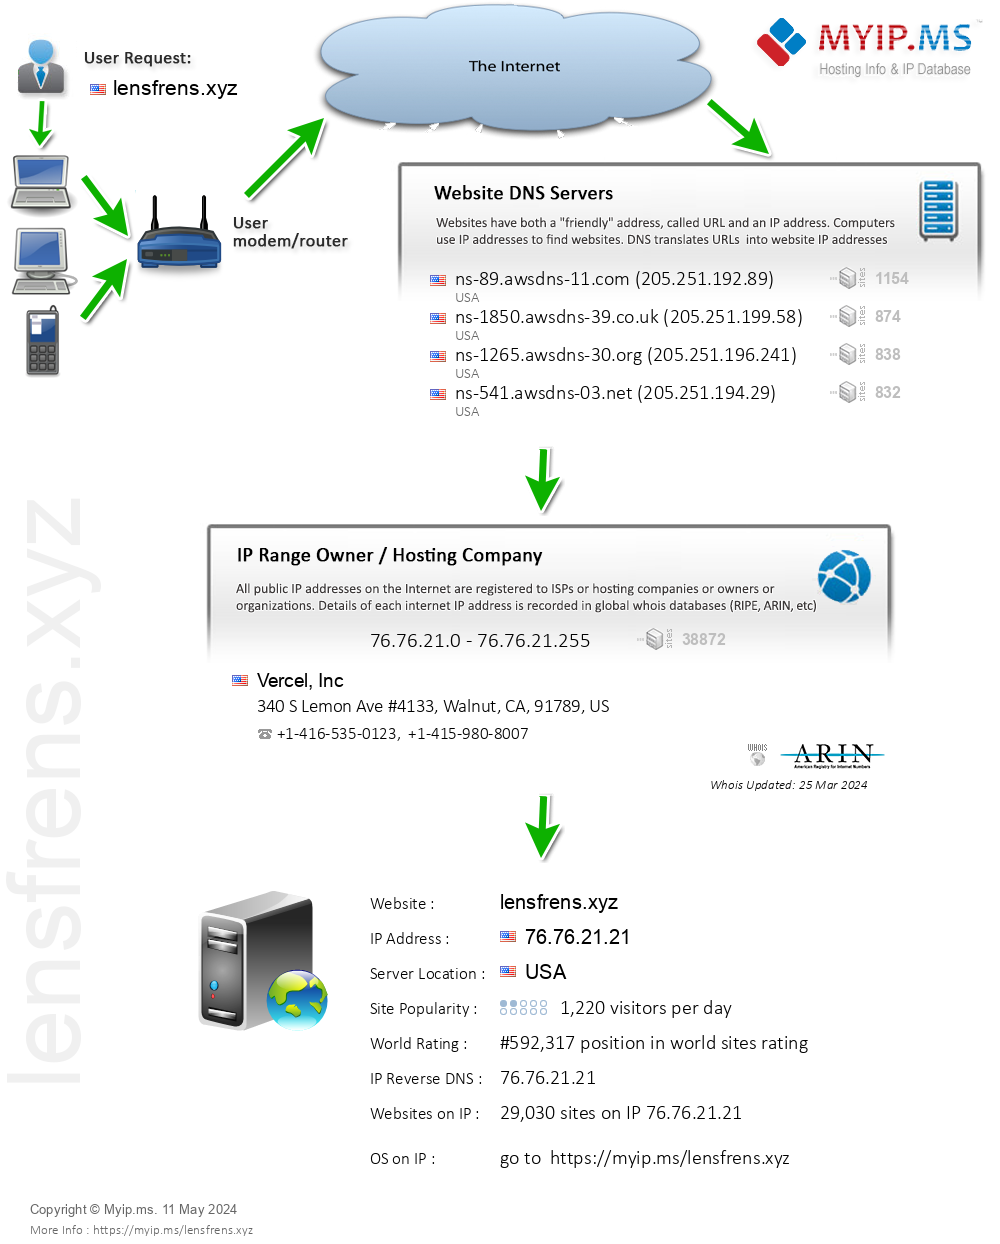 Lensfrens.xyz - Website Hosting Visual IP Diagram